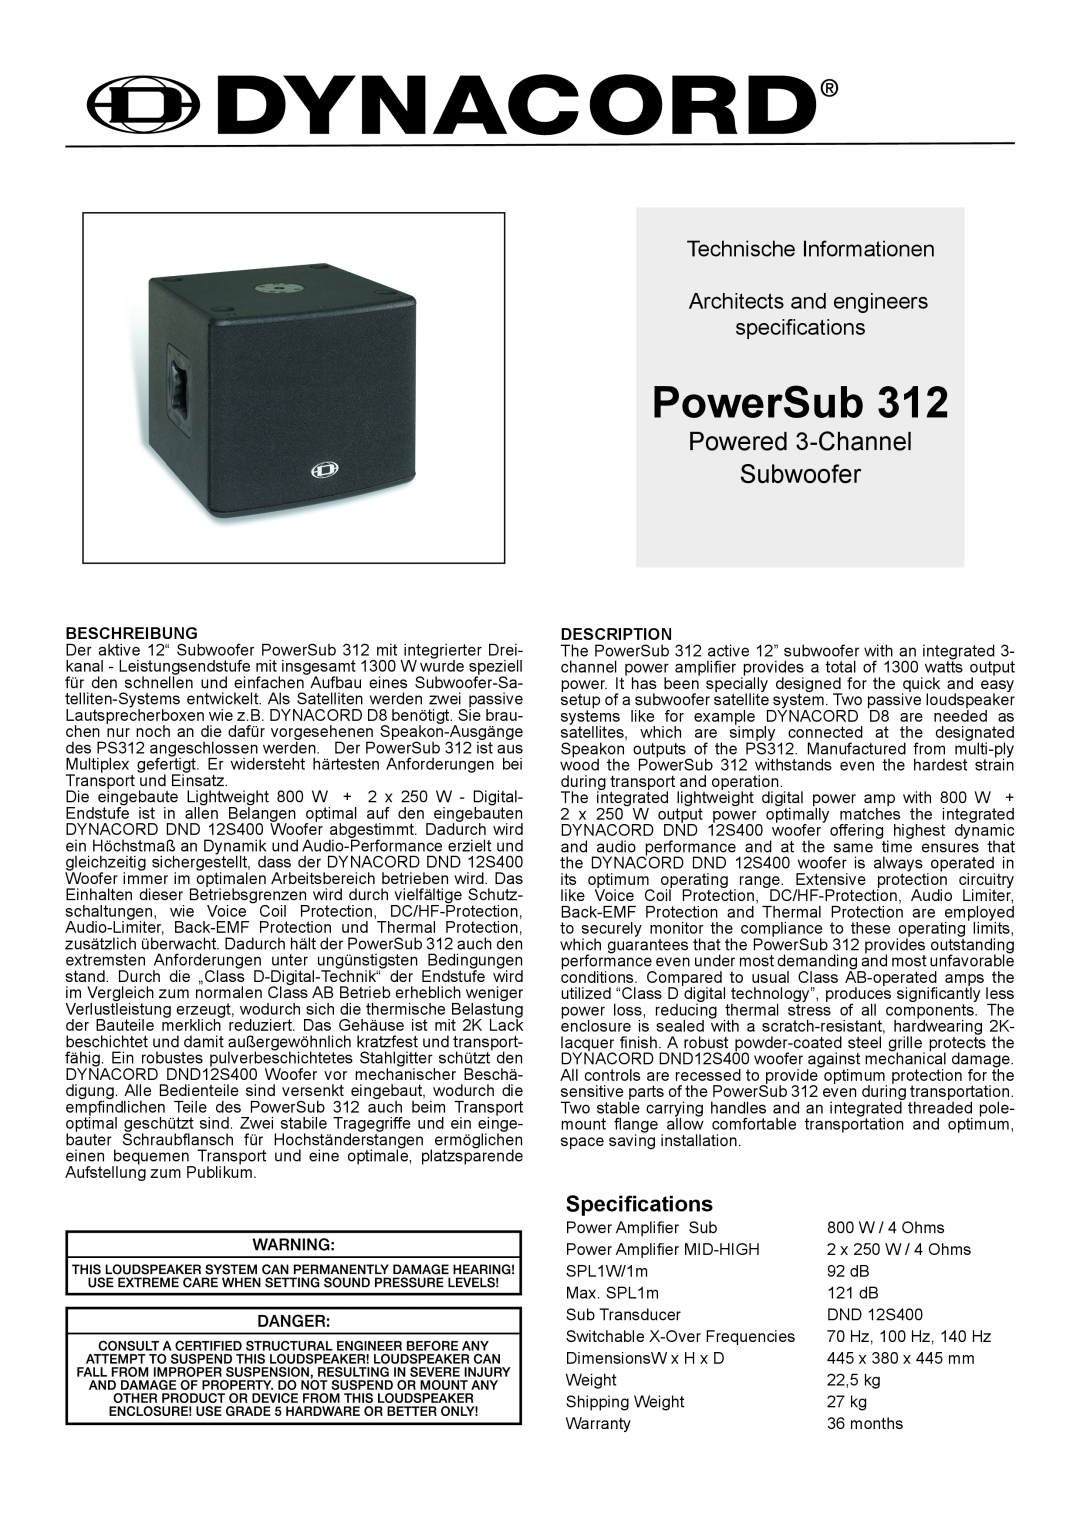 Dynacord 312 dimensions PowerSub, Powered 3-Channel Subwoofer, Technische Informationen, Specifications, Beschreibung 